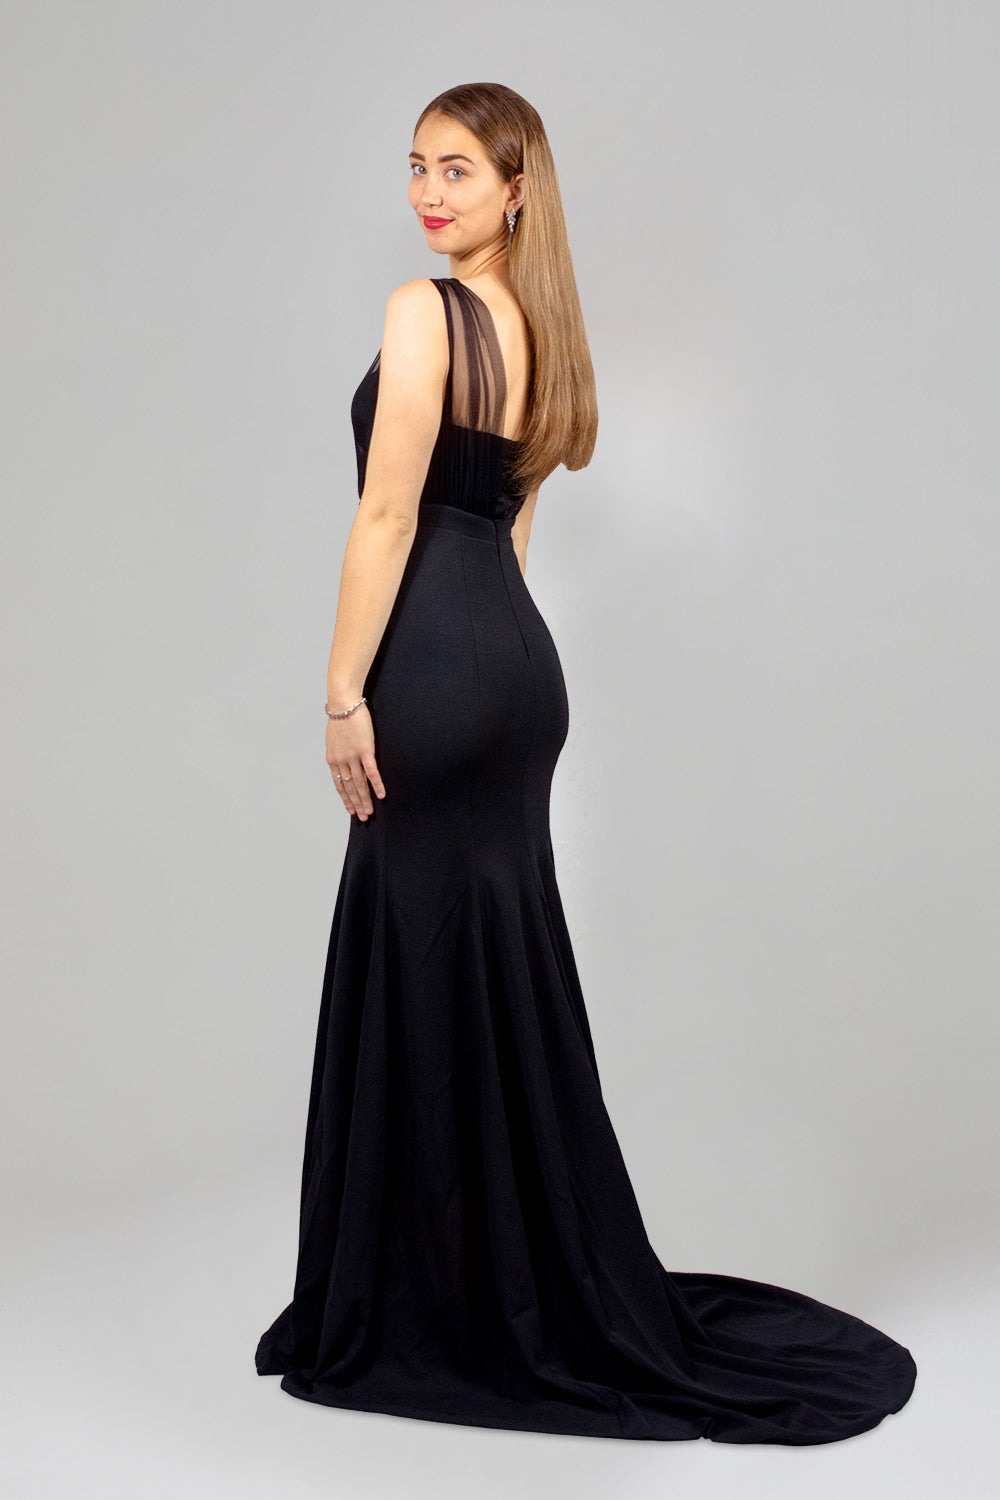 custom made fitted black bridesmaid dresses perth melbourne australia envious bridal & formal